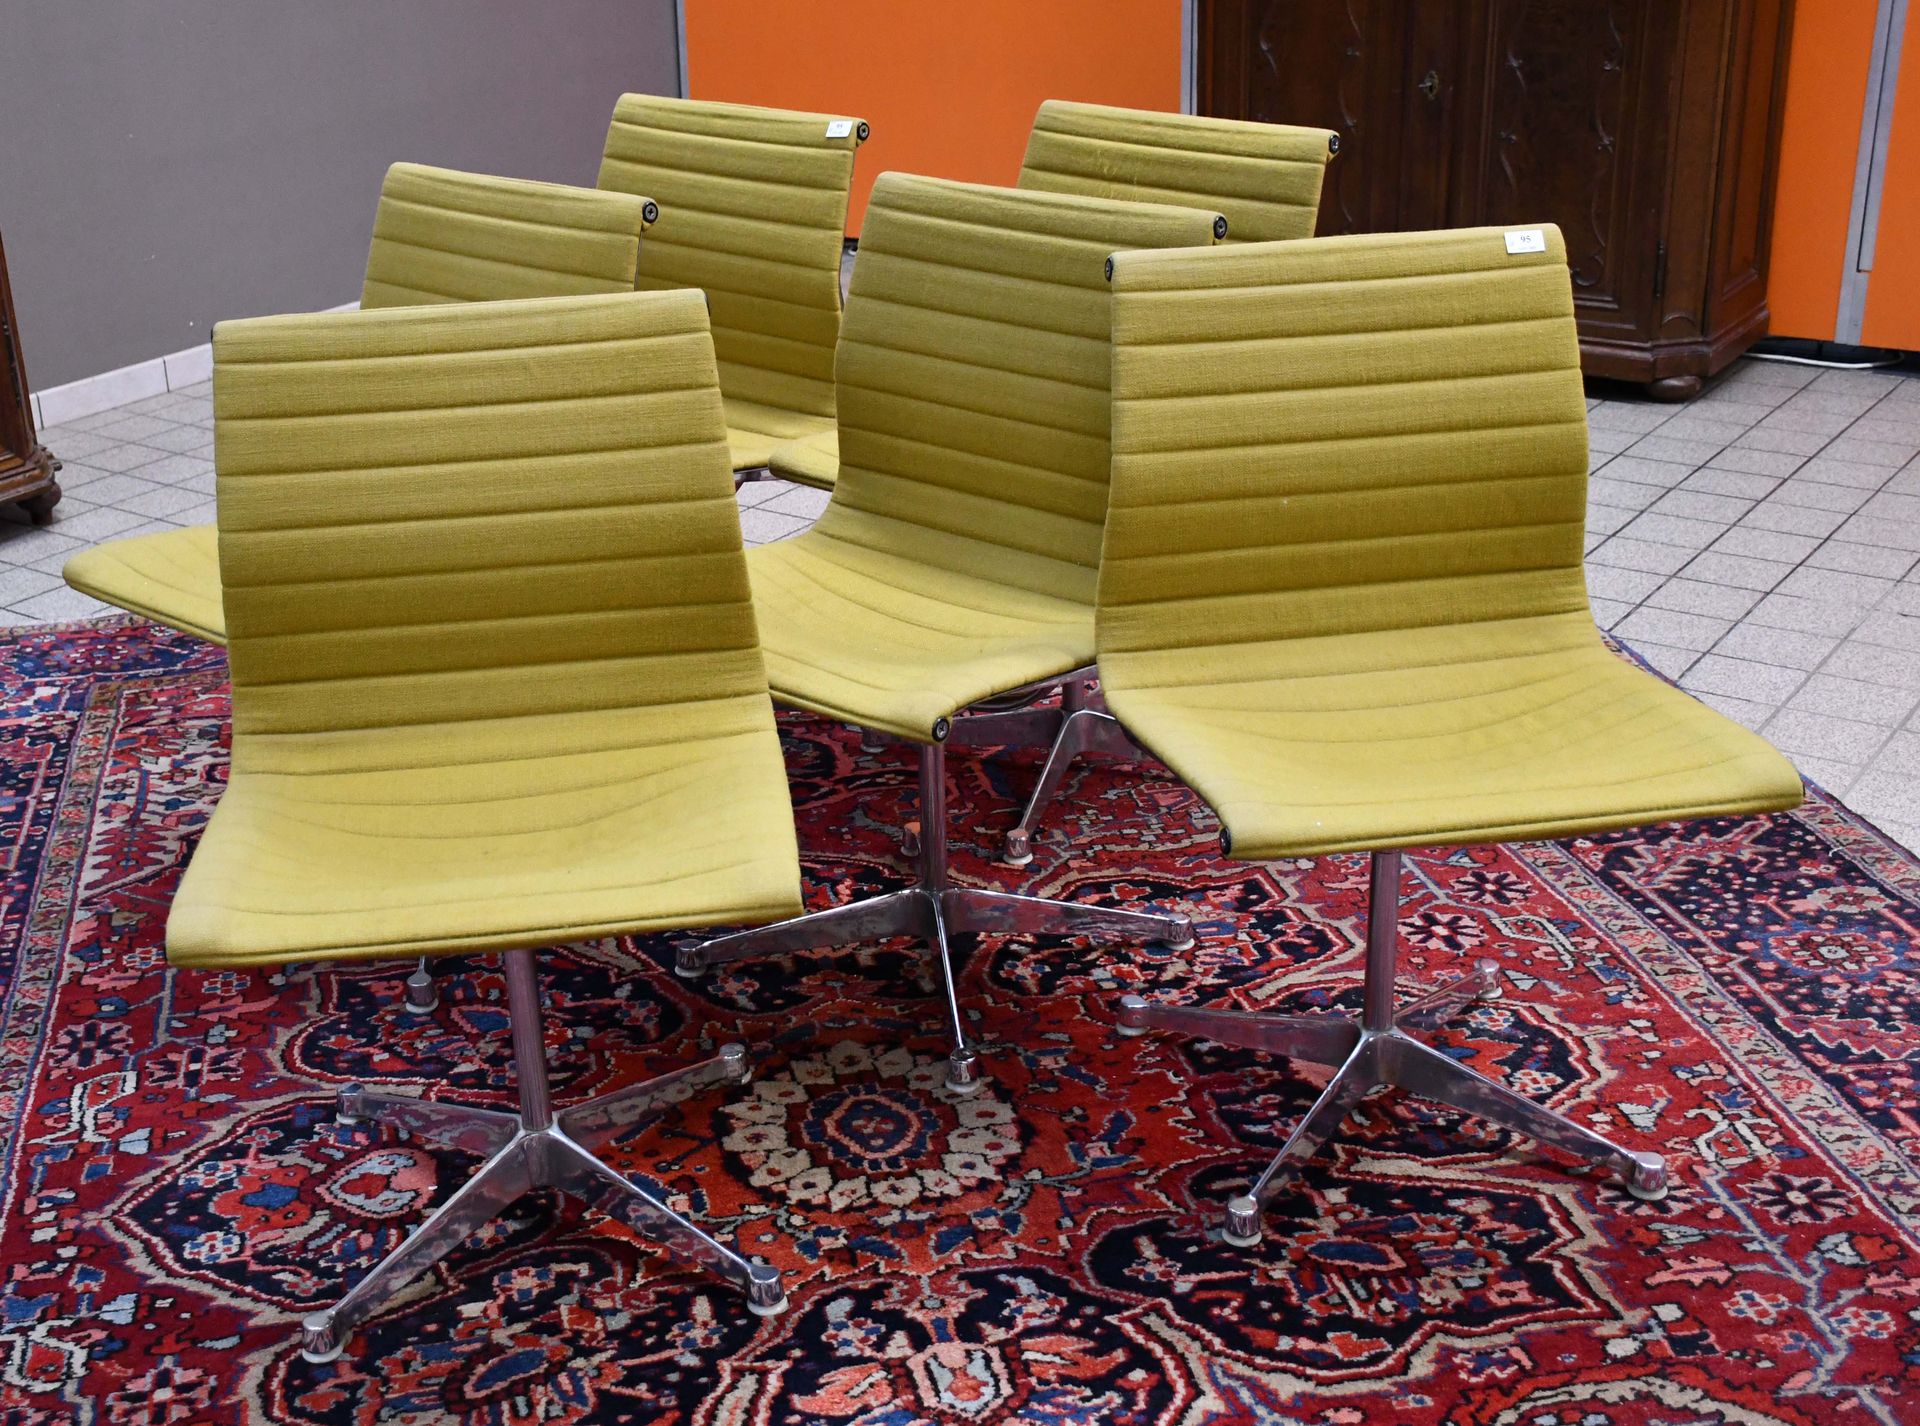 Null Herman Miller / Charles Eames

Serie de seis sillas de cromo y tela.